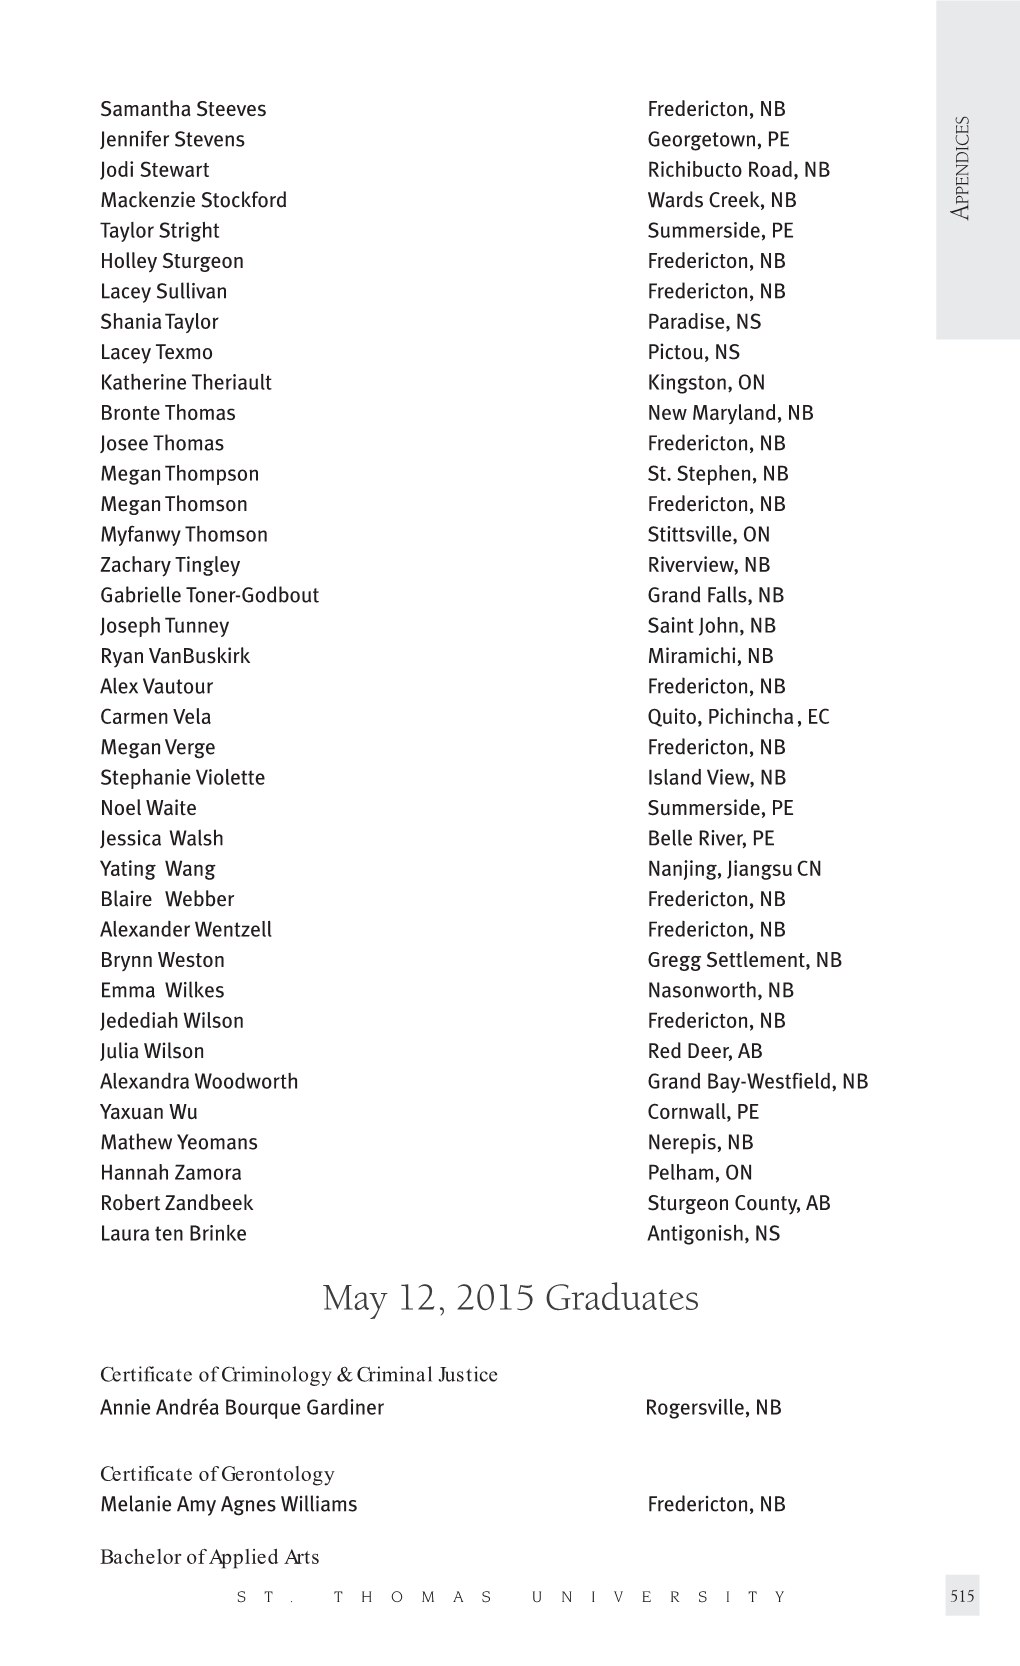 May 12, 2015 Graduates